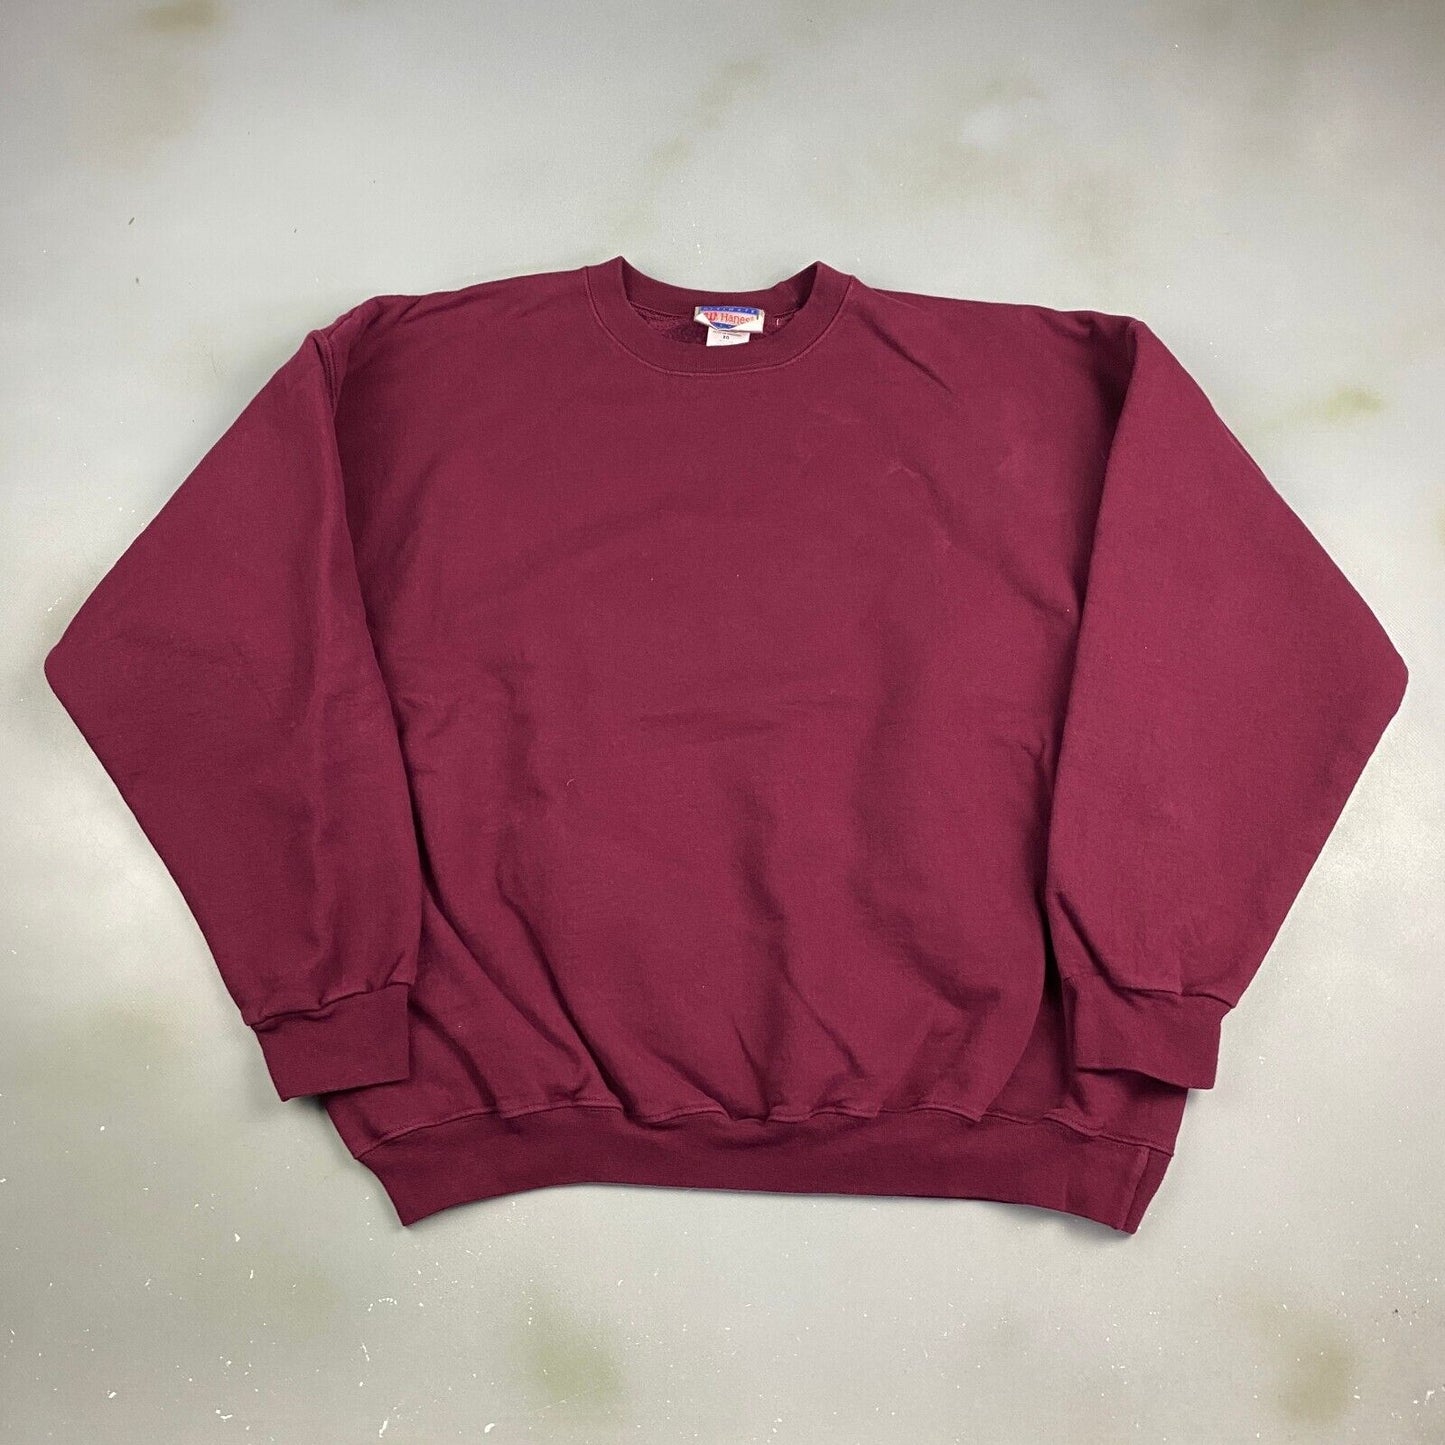 VINTAGE 90s Hanes Blank Red Crewneck Sweater sz XL Mens Adult